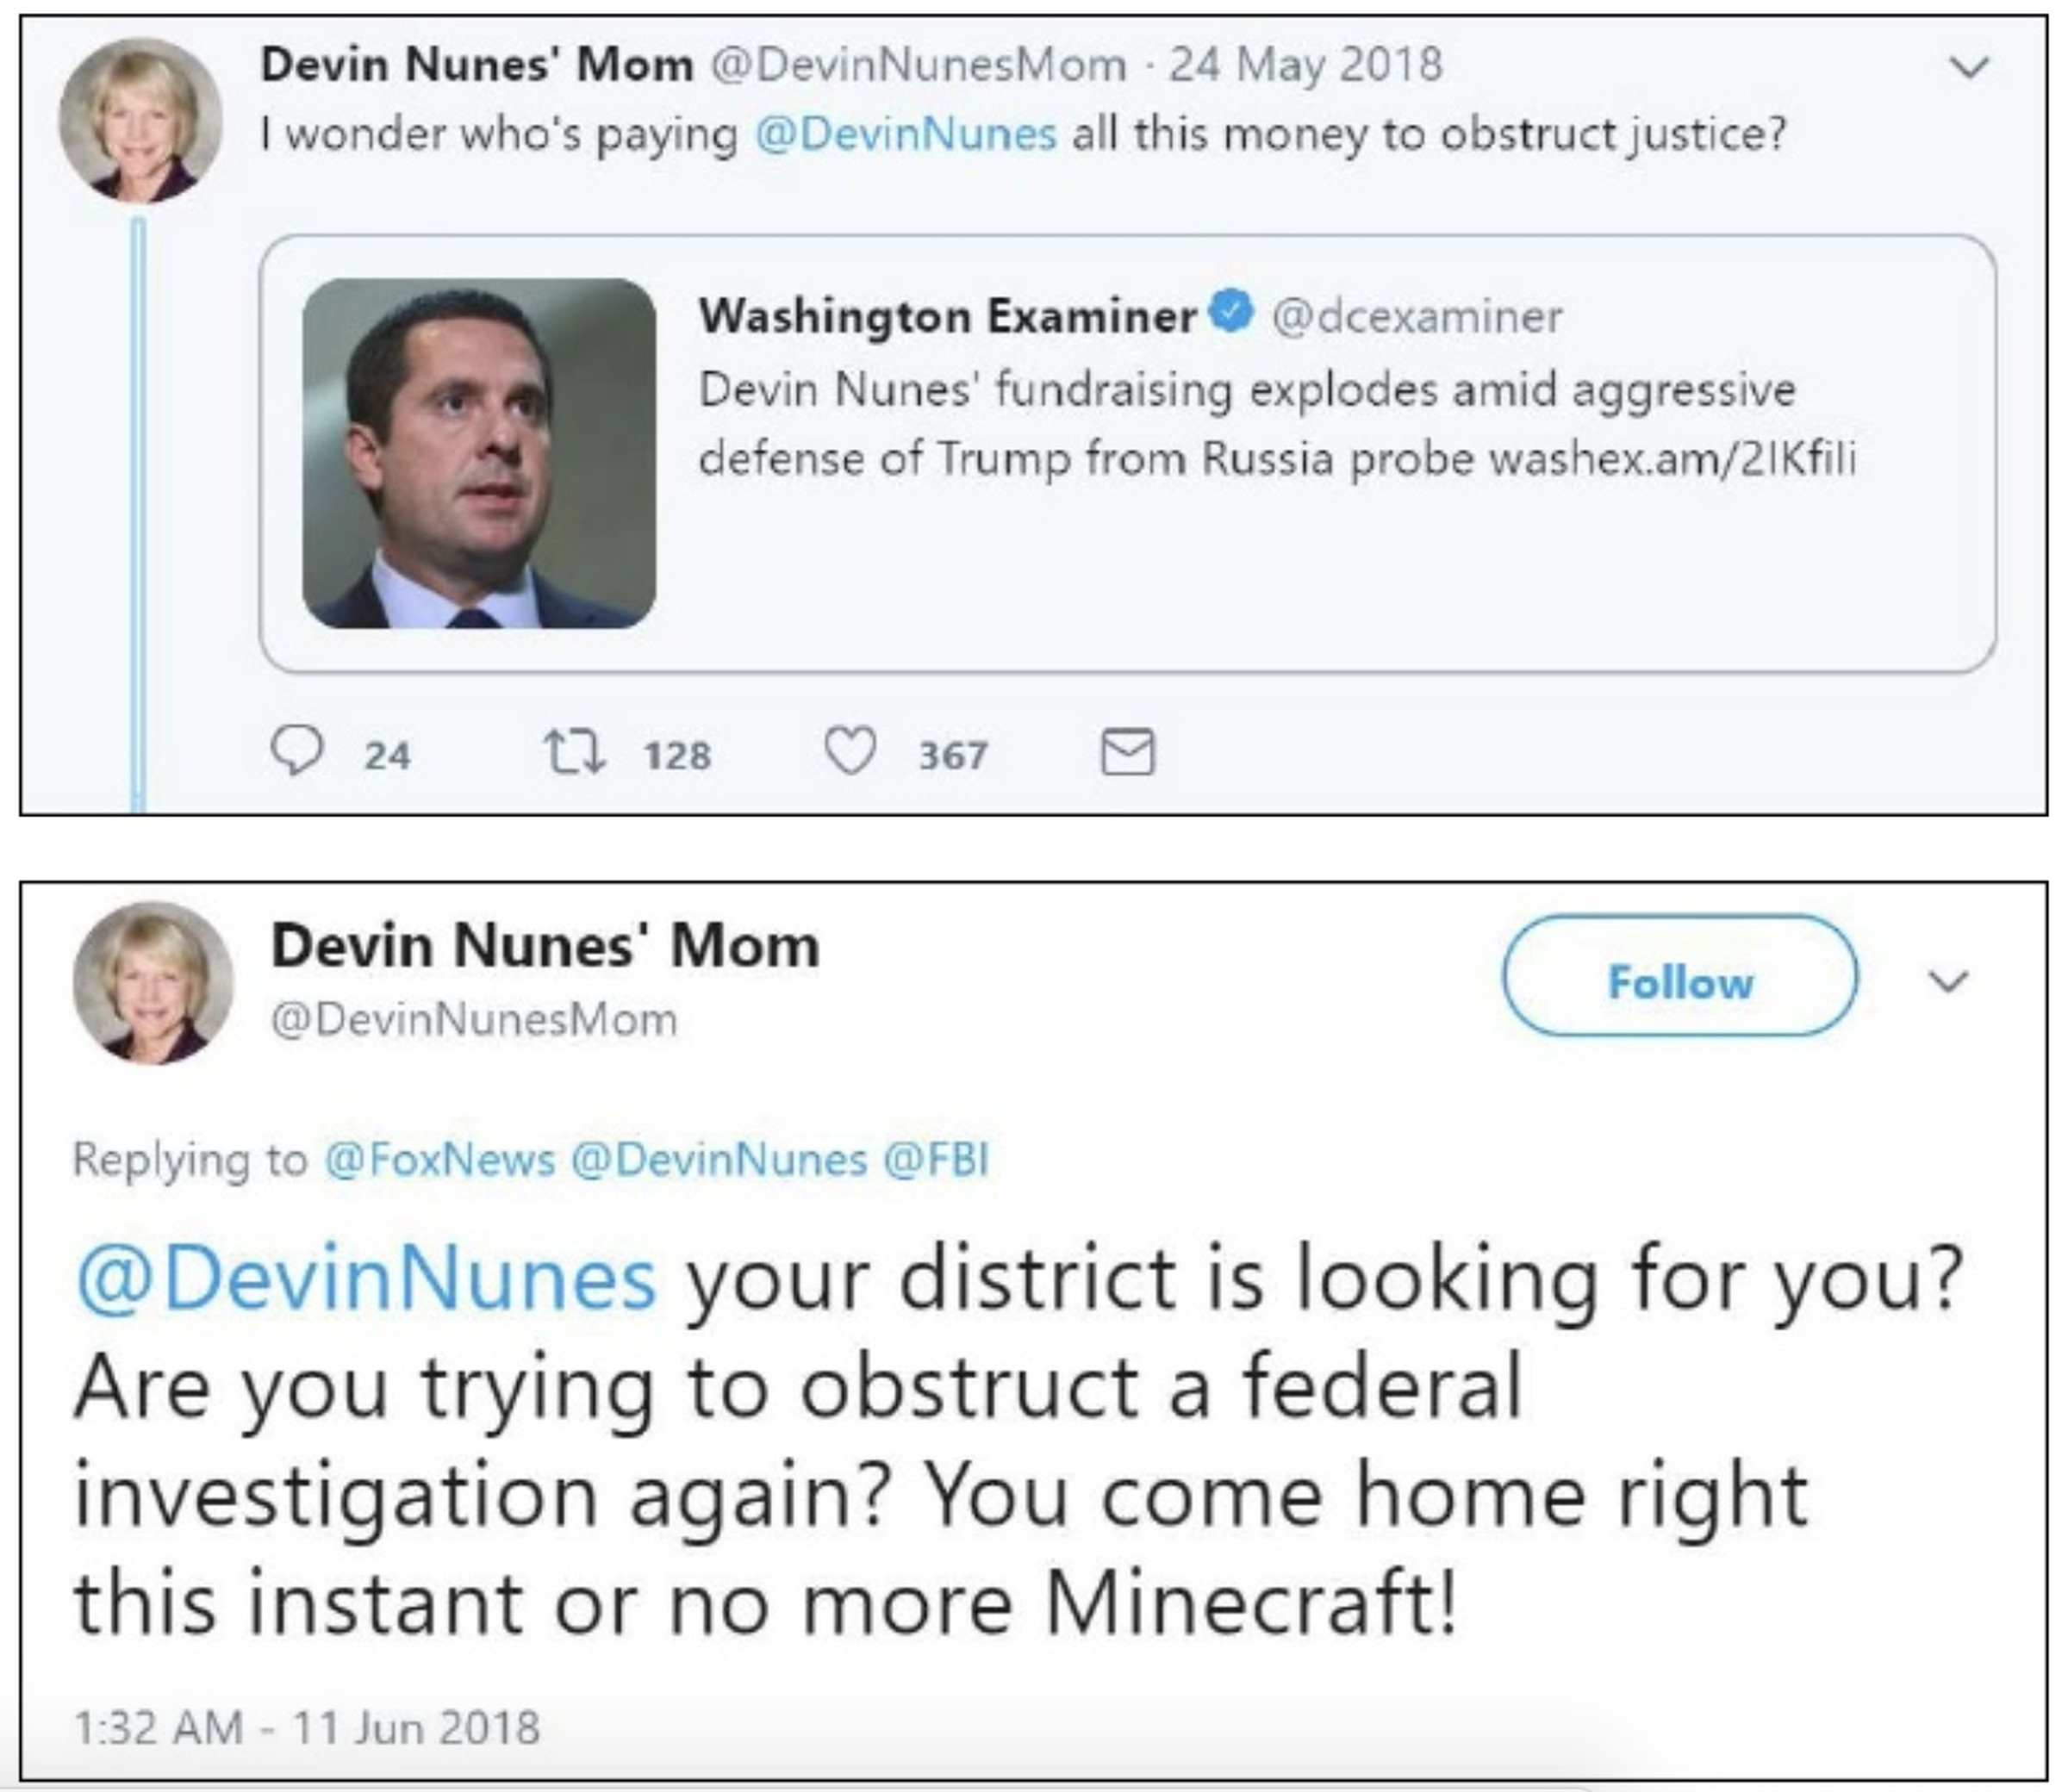 Devin Nunes’ Mom lawsuit tweets